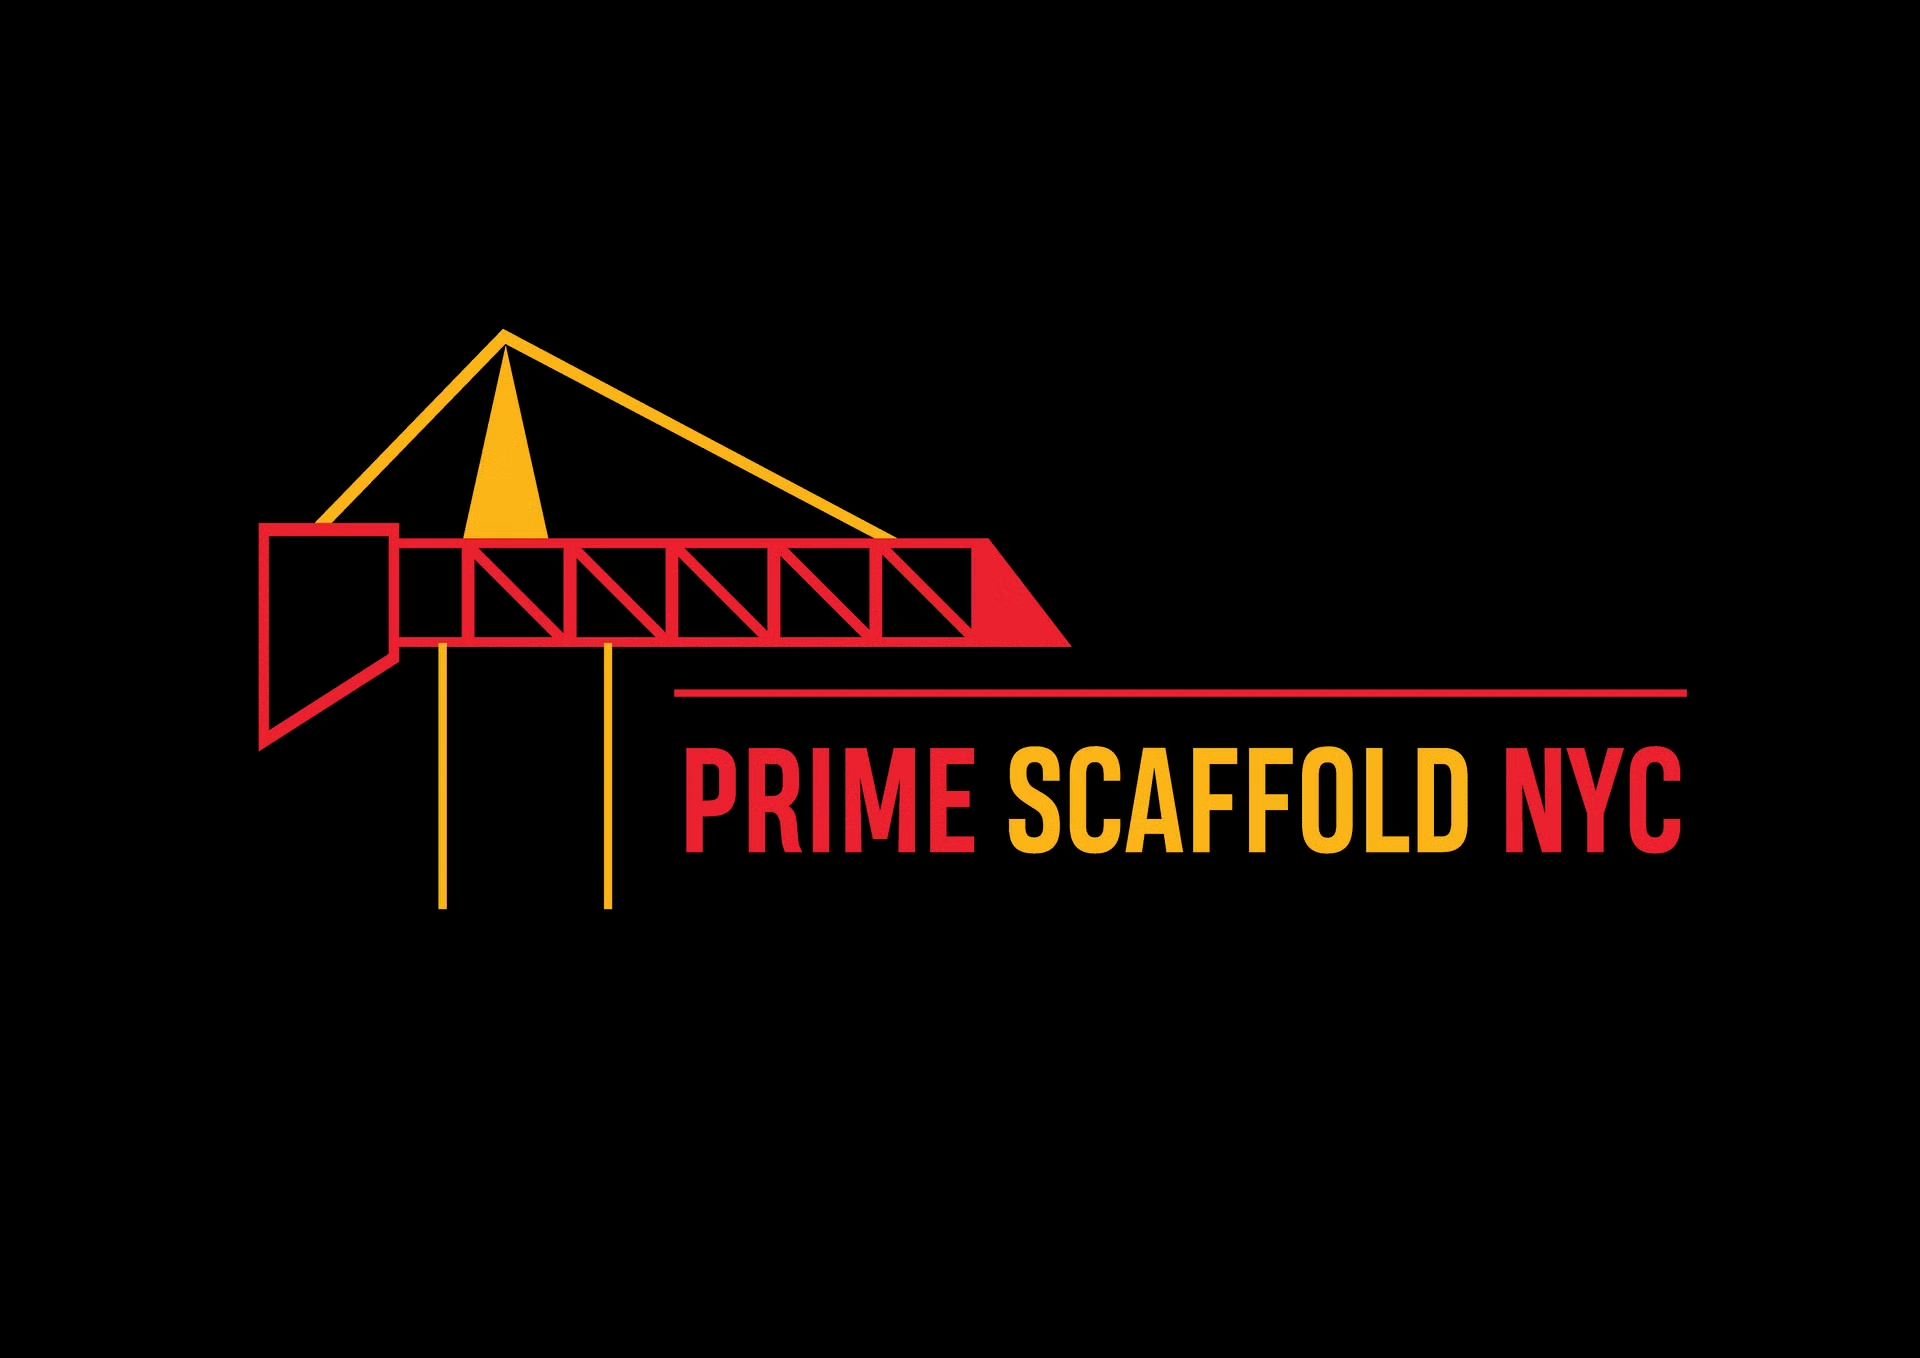 PRIME SCAFFOLD NYC